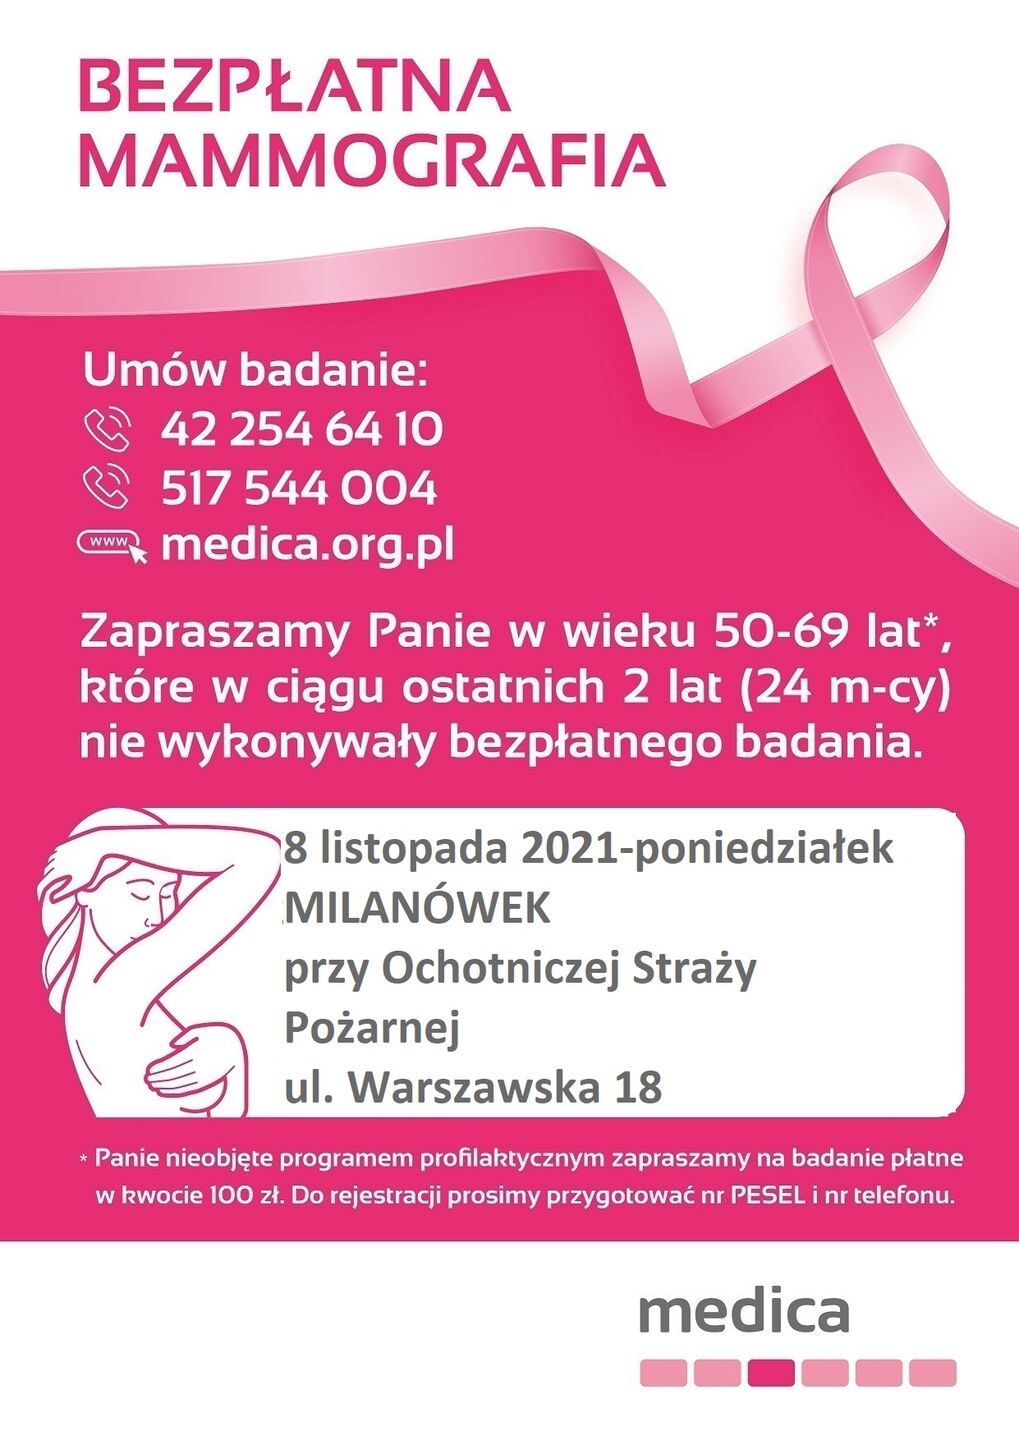 images/aa_artykuly_obrazki/2021/20211001_mammografia_plakat.jpg